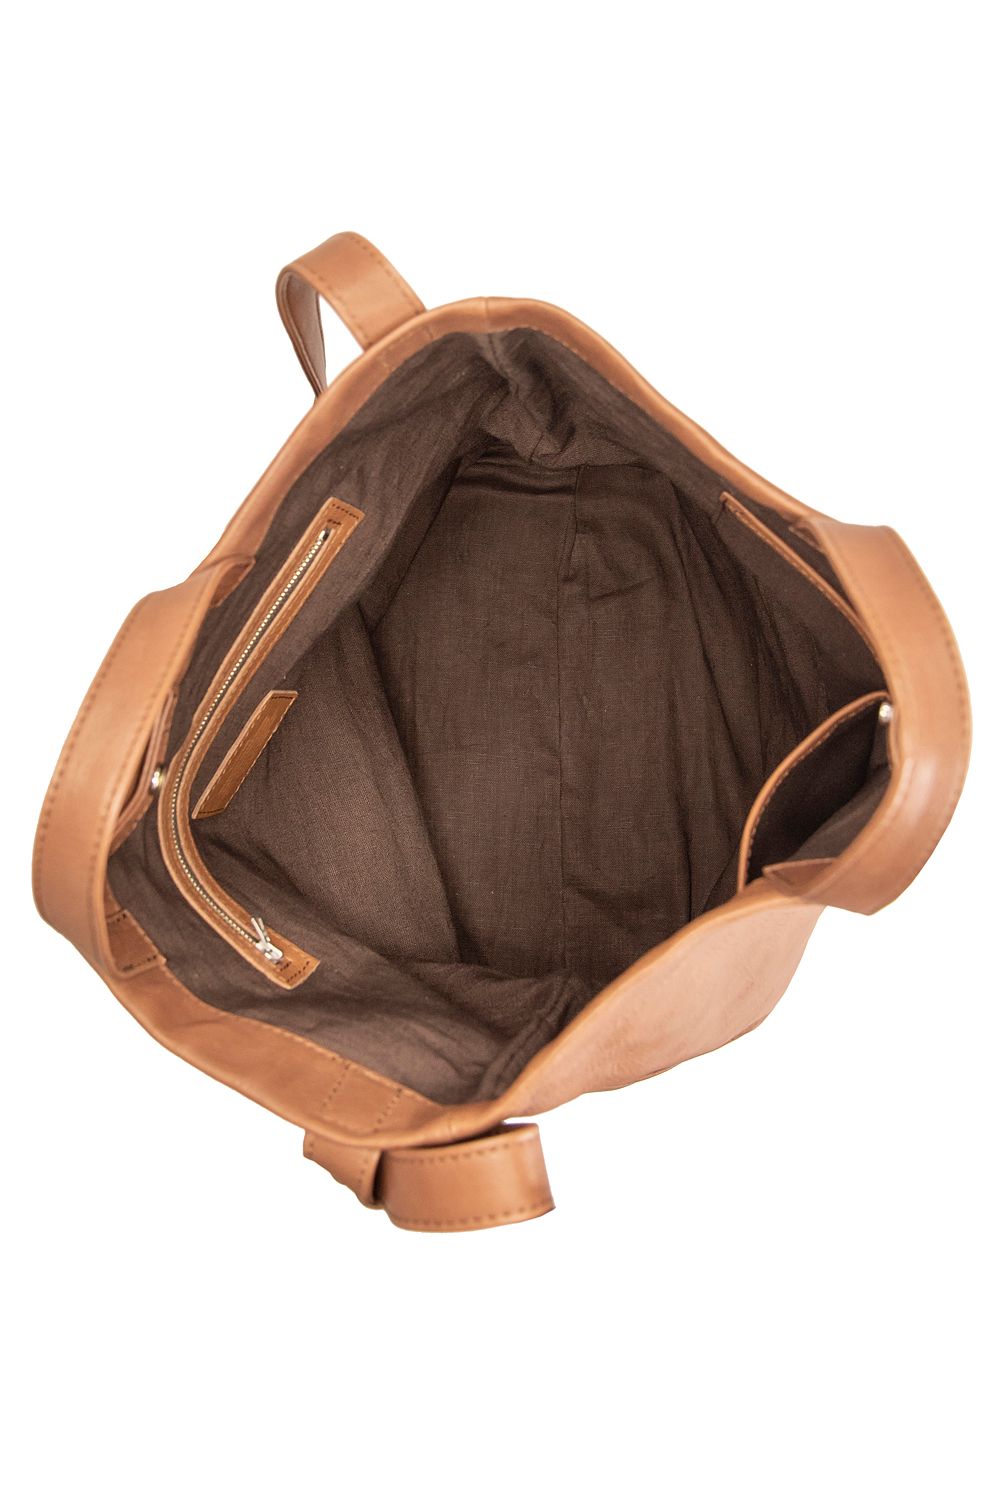 fino-one shoulder bag / フィノ-ワンショルダーバッグ - チョコ(col.23)